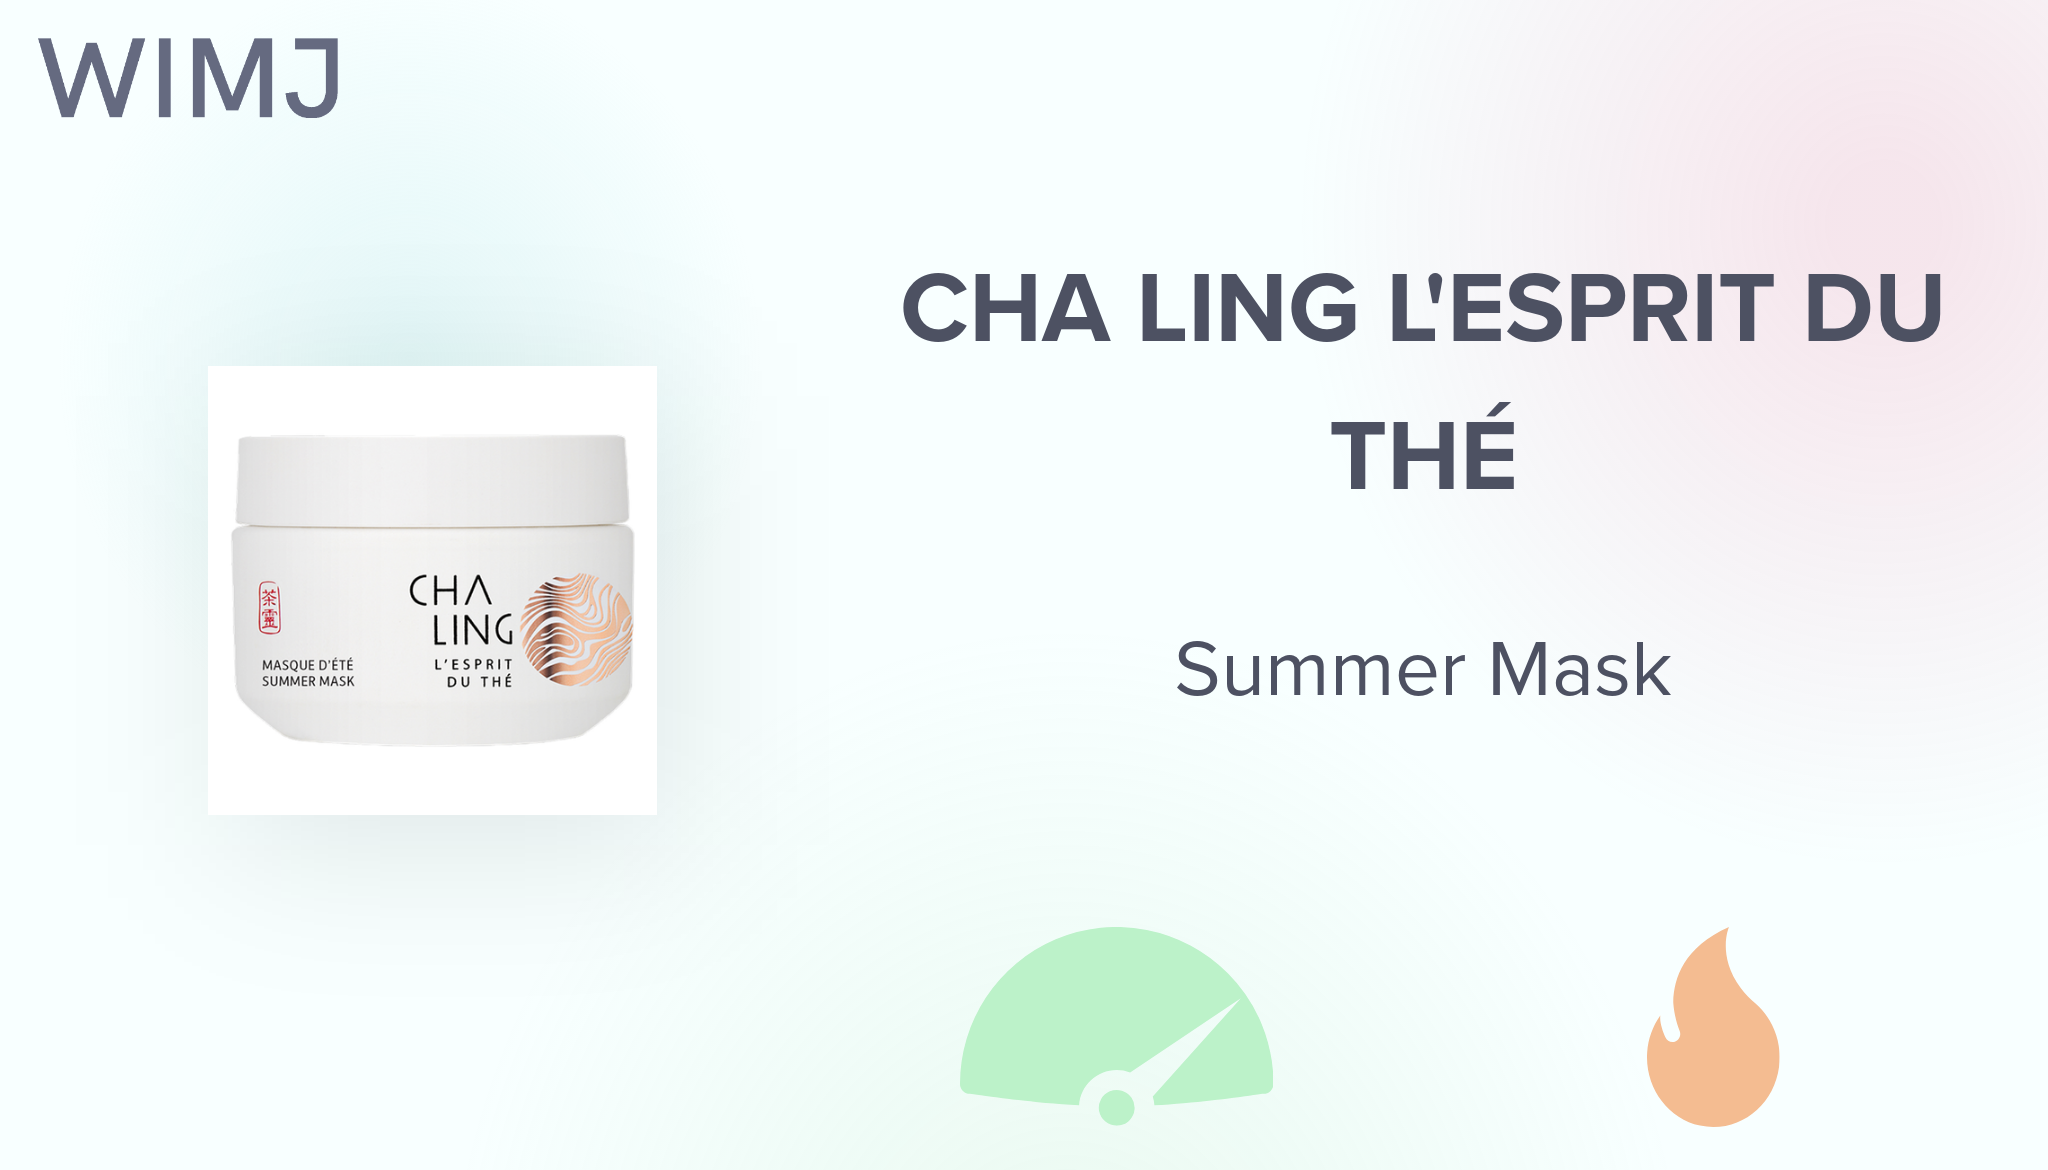 Review: Cha Ling L'esprit du Thé - Summer Mask - WIMJ